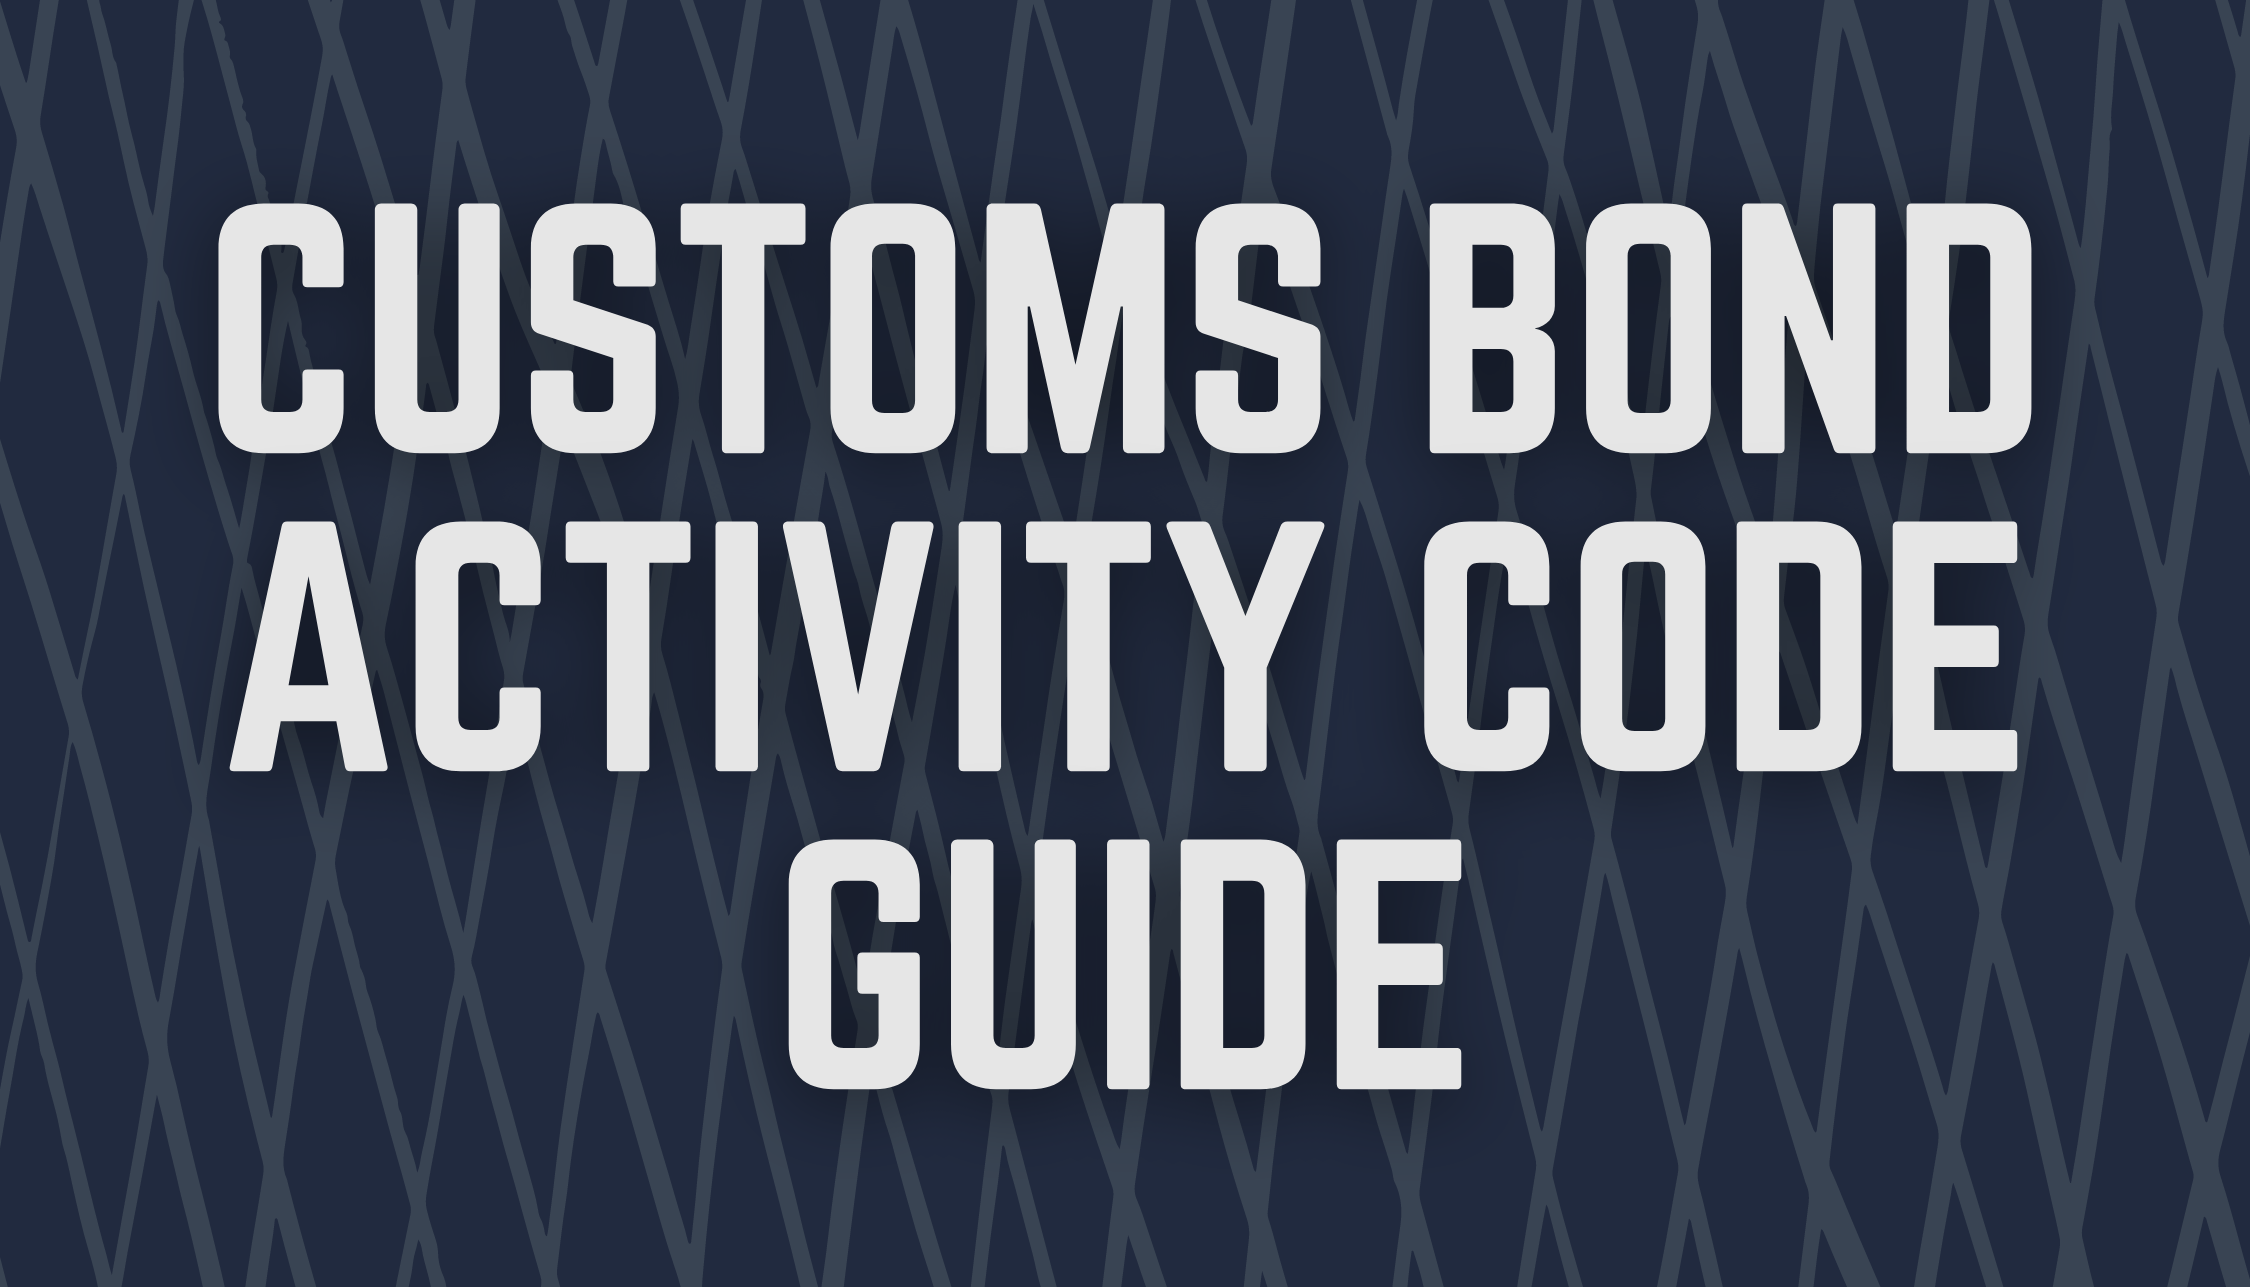 Customs Bond Activity Code Guide